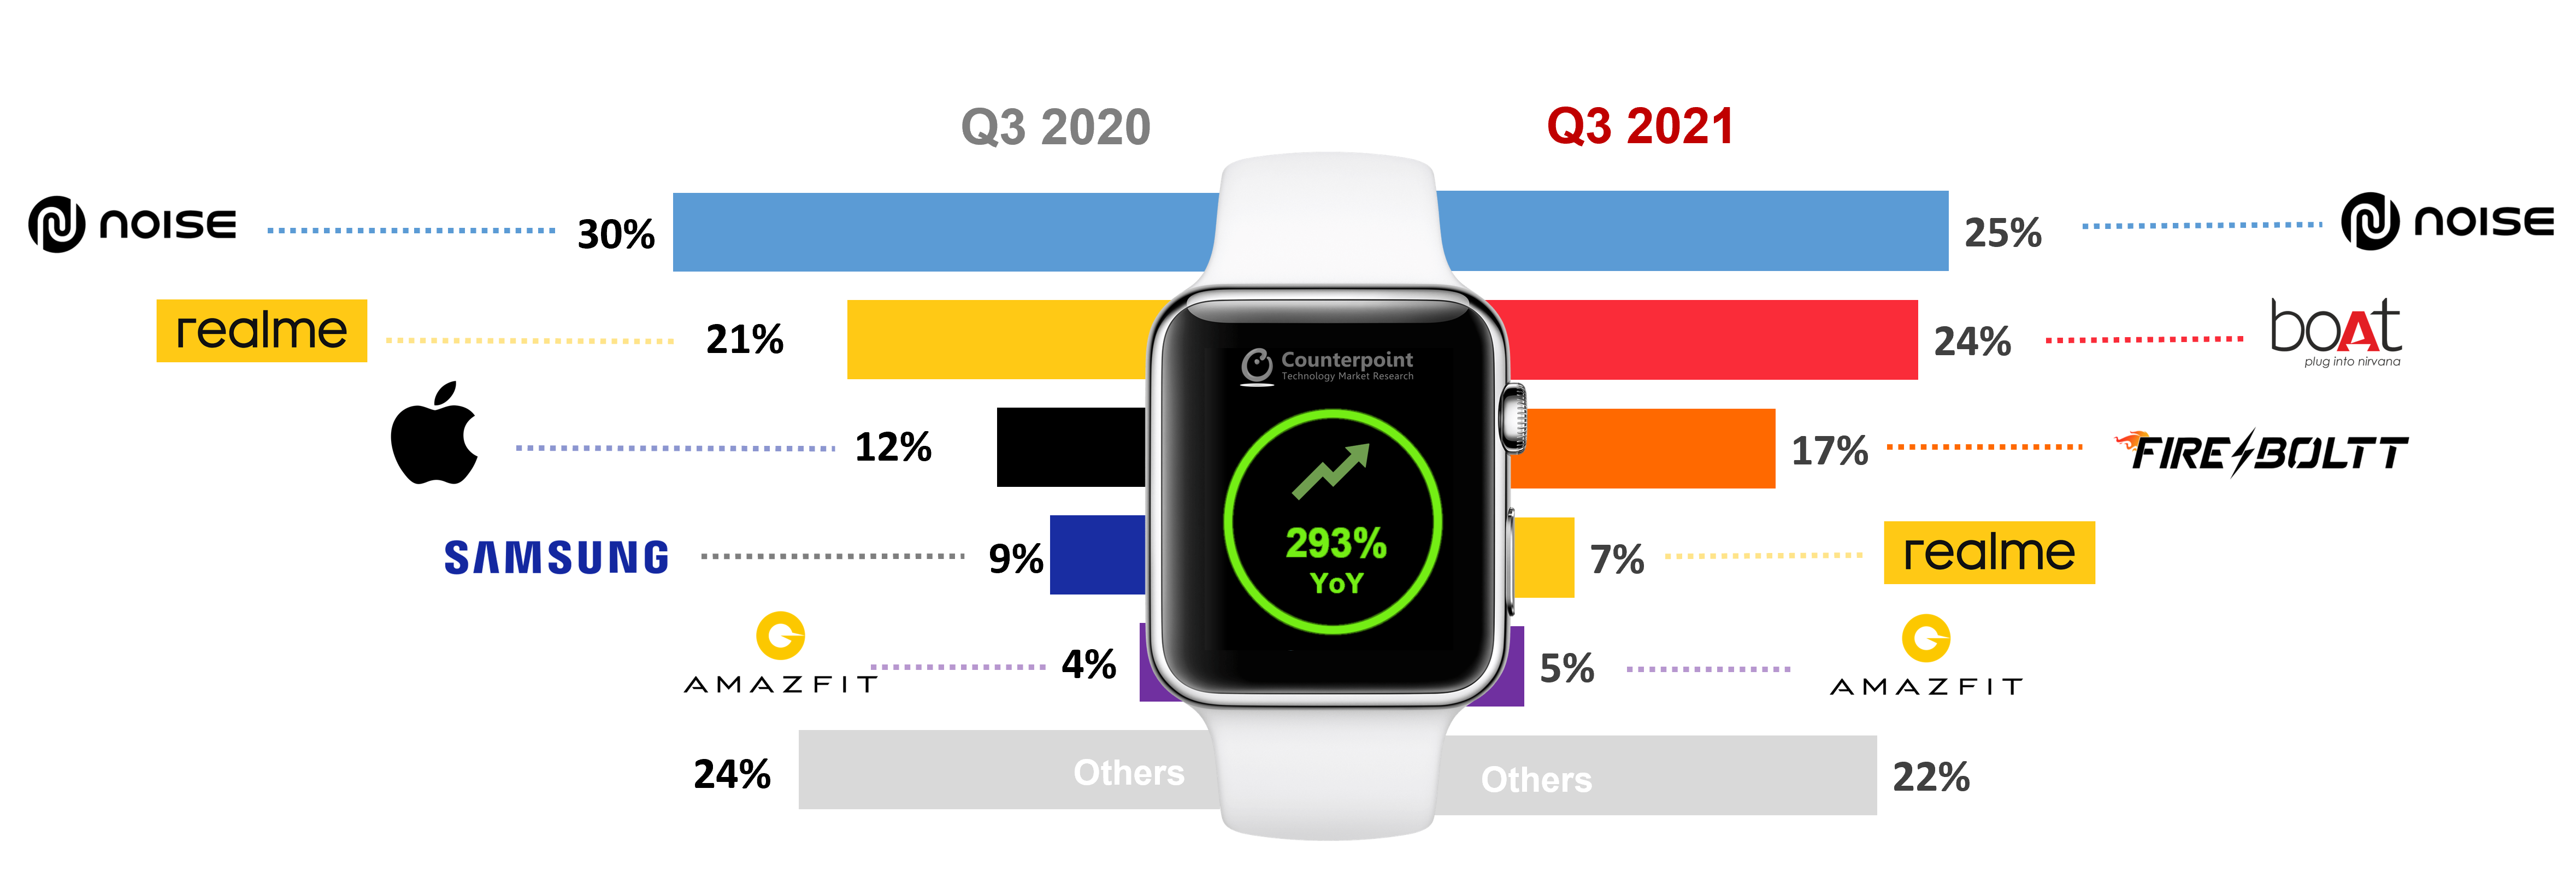 India Smartwatch Market Share of Top 5 Brands, Q3 2021 vs Q3 2020